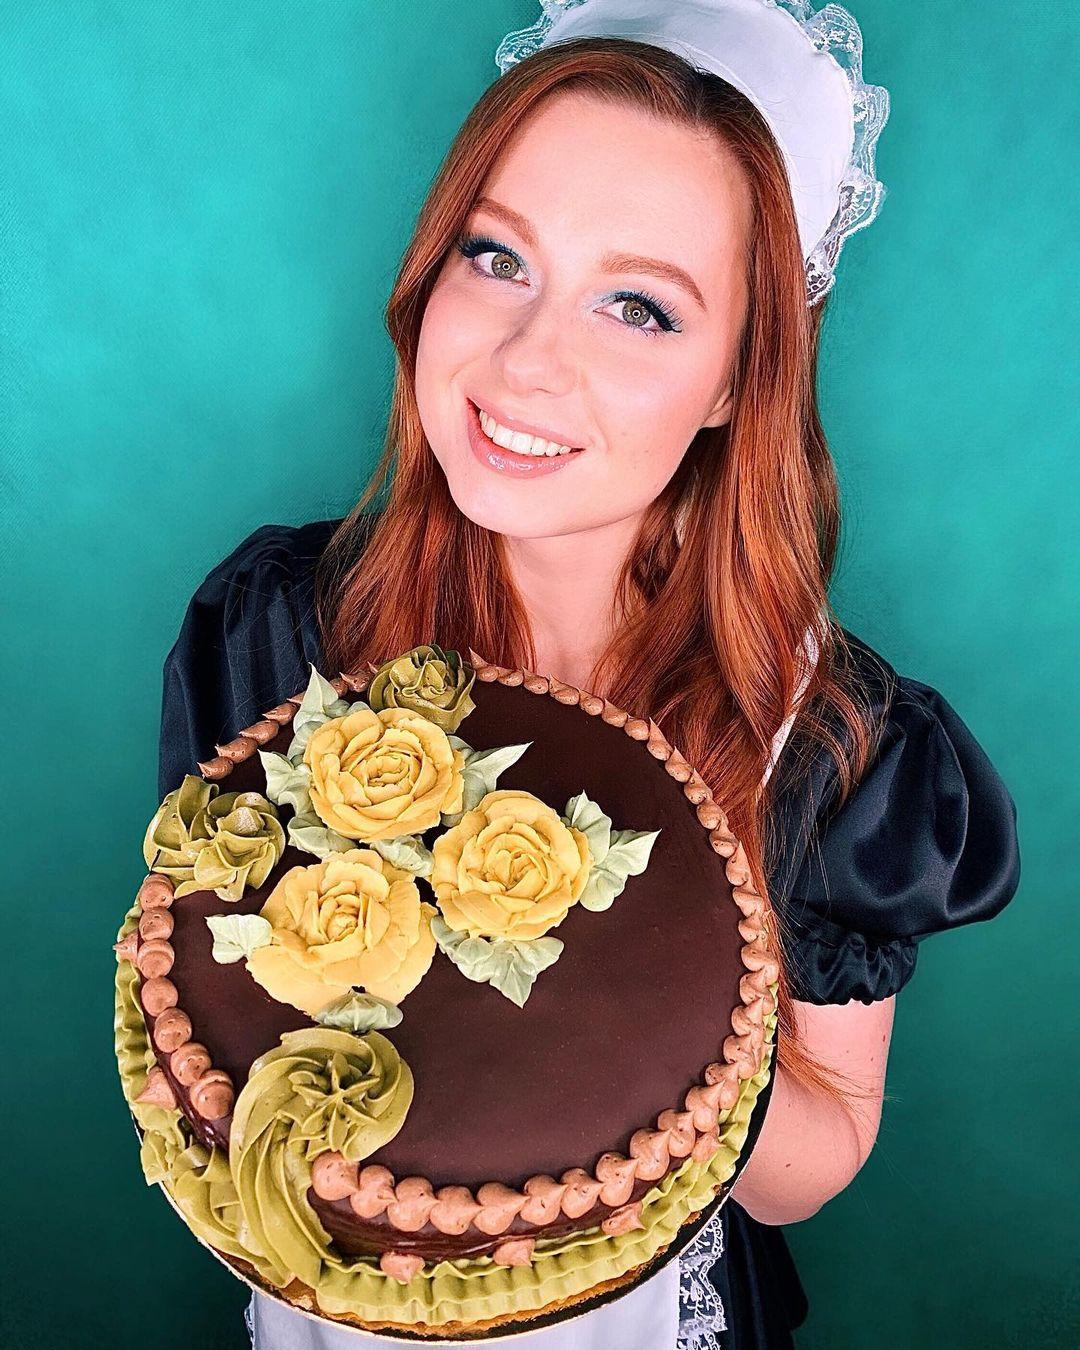 На все времена: Юлия Савичева поделилась своим рецептом торта «Прага»